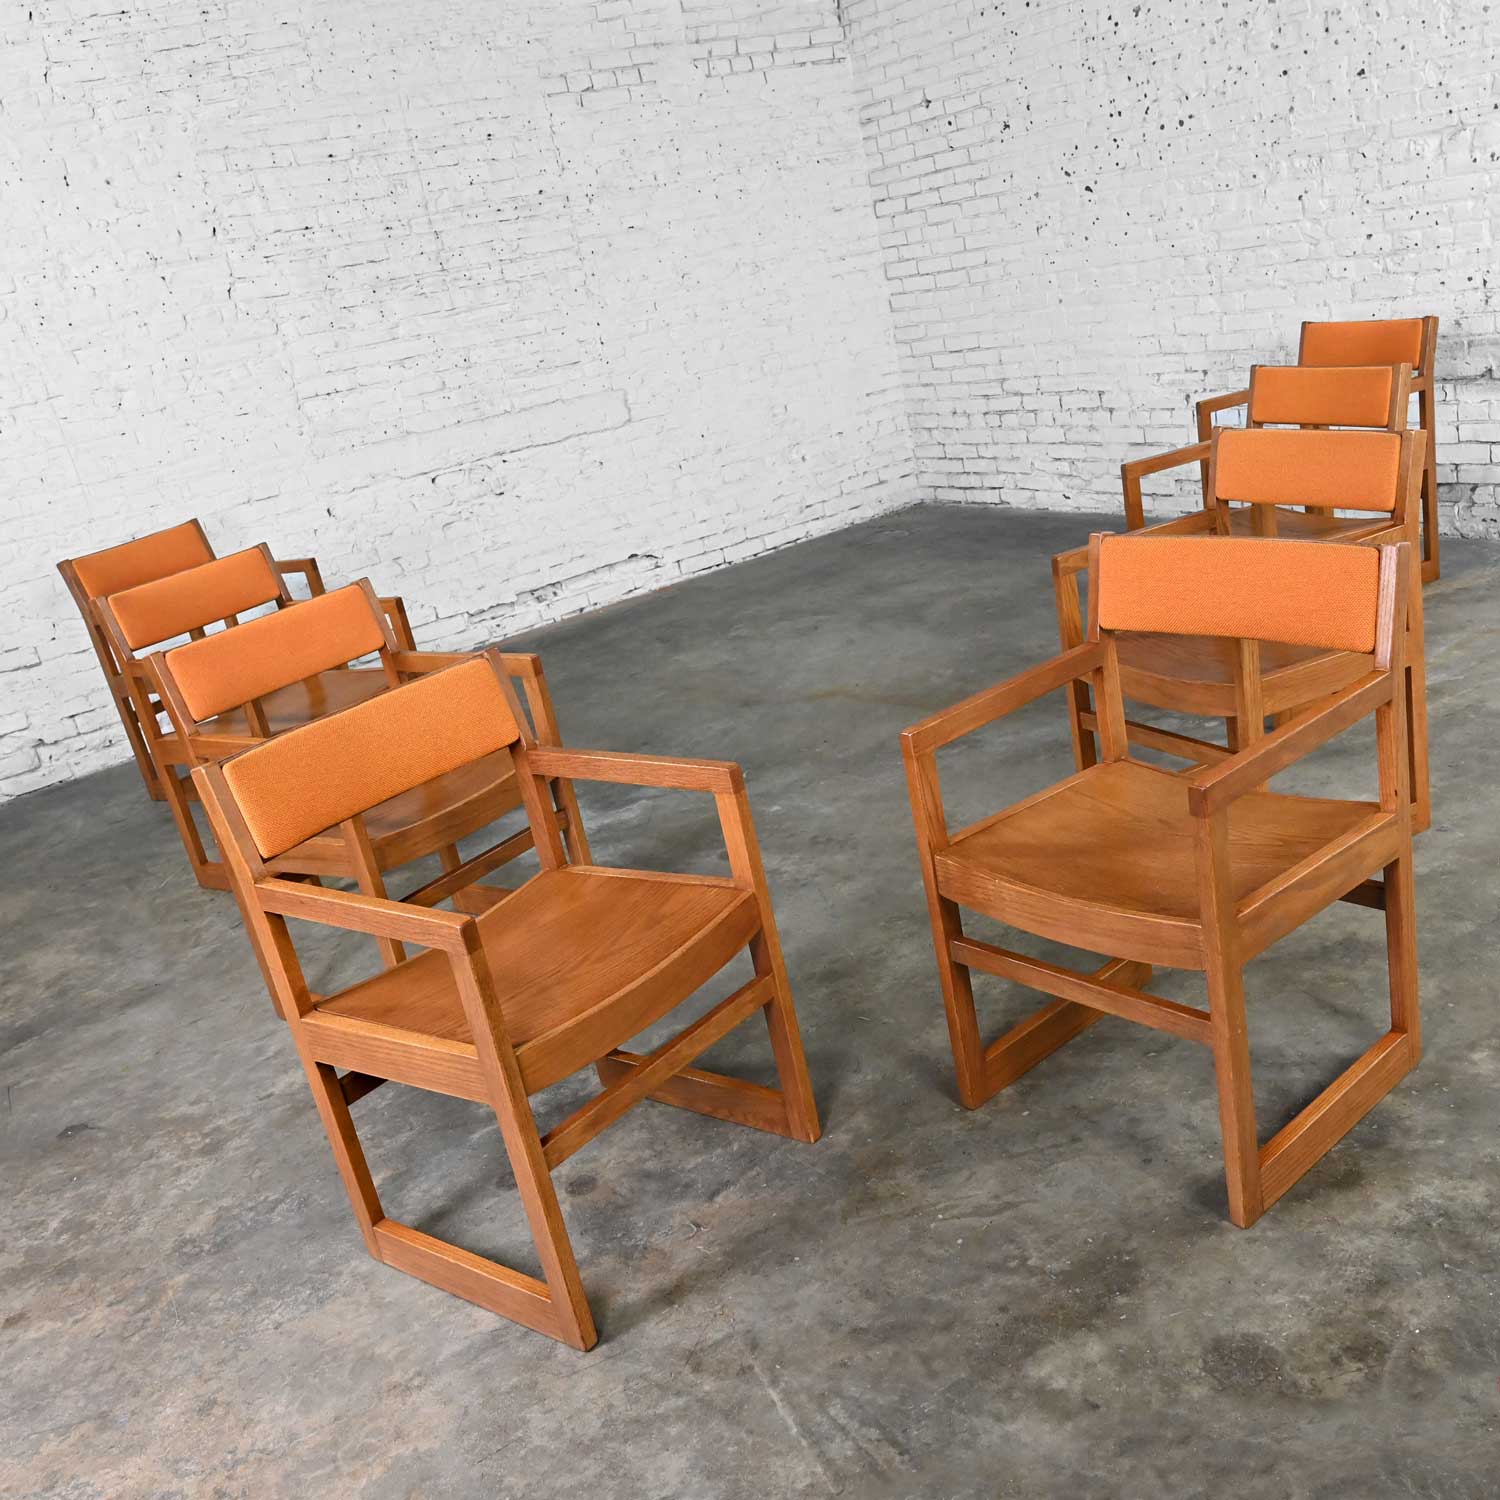 1970’s Modern Jasper Chair Co Oak Dining Chairs Golden Orange Tweed Hopsacking Bentwood Seats & Sleigh Bases Set of 8